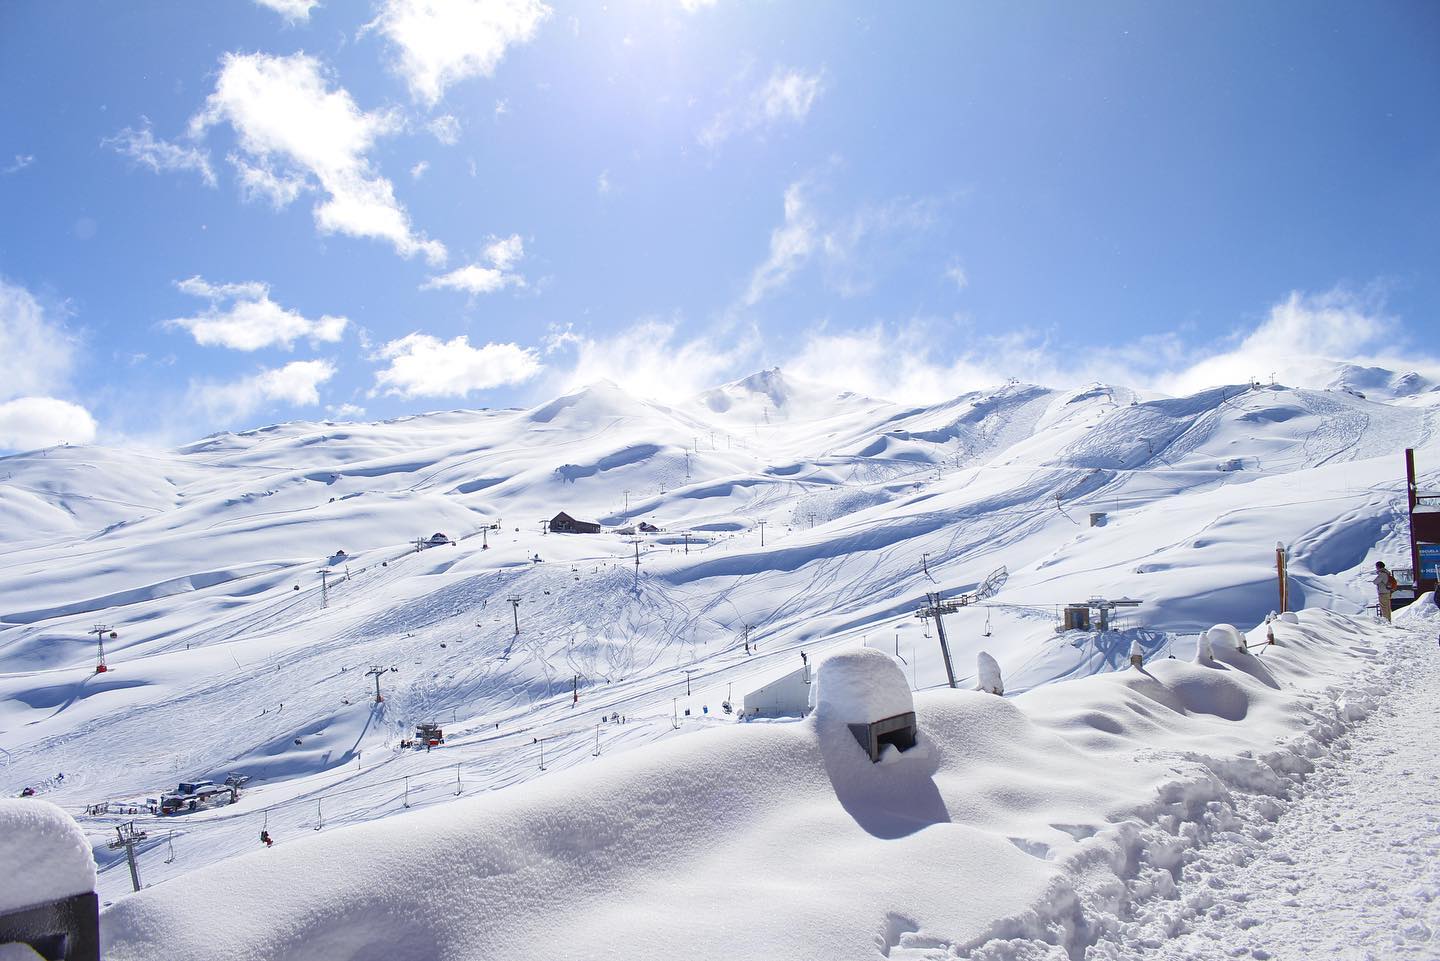 Kép: Valle Nevado Ski Resort